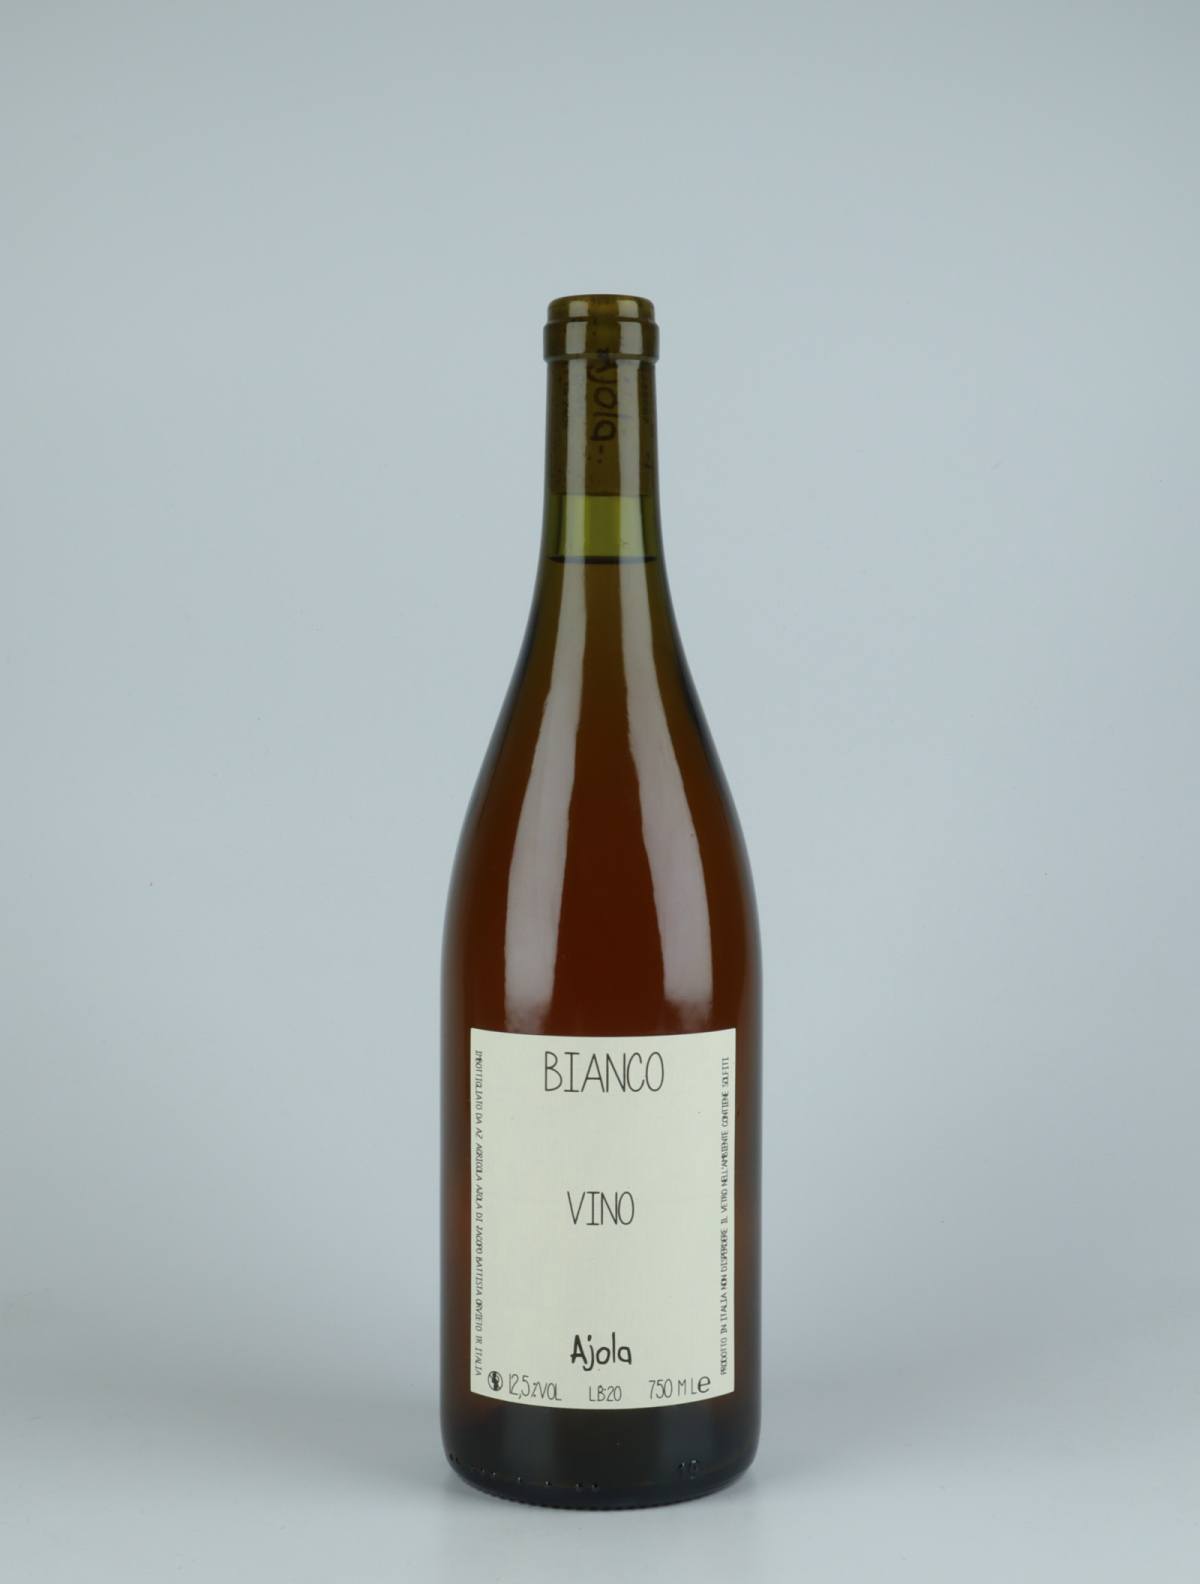 A bottle 2020 Vino Bianco Orange wine from Ajola, Umbria in Italy